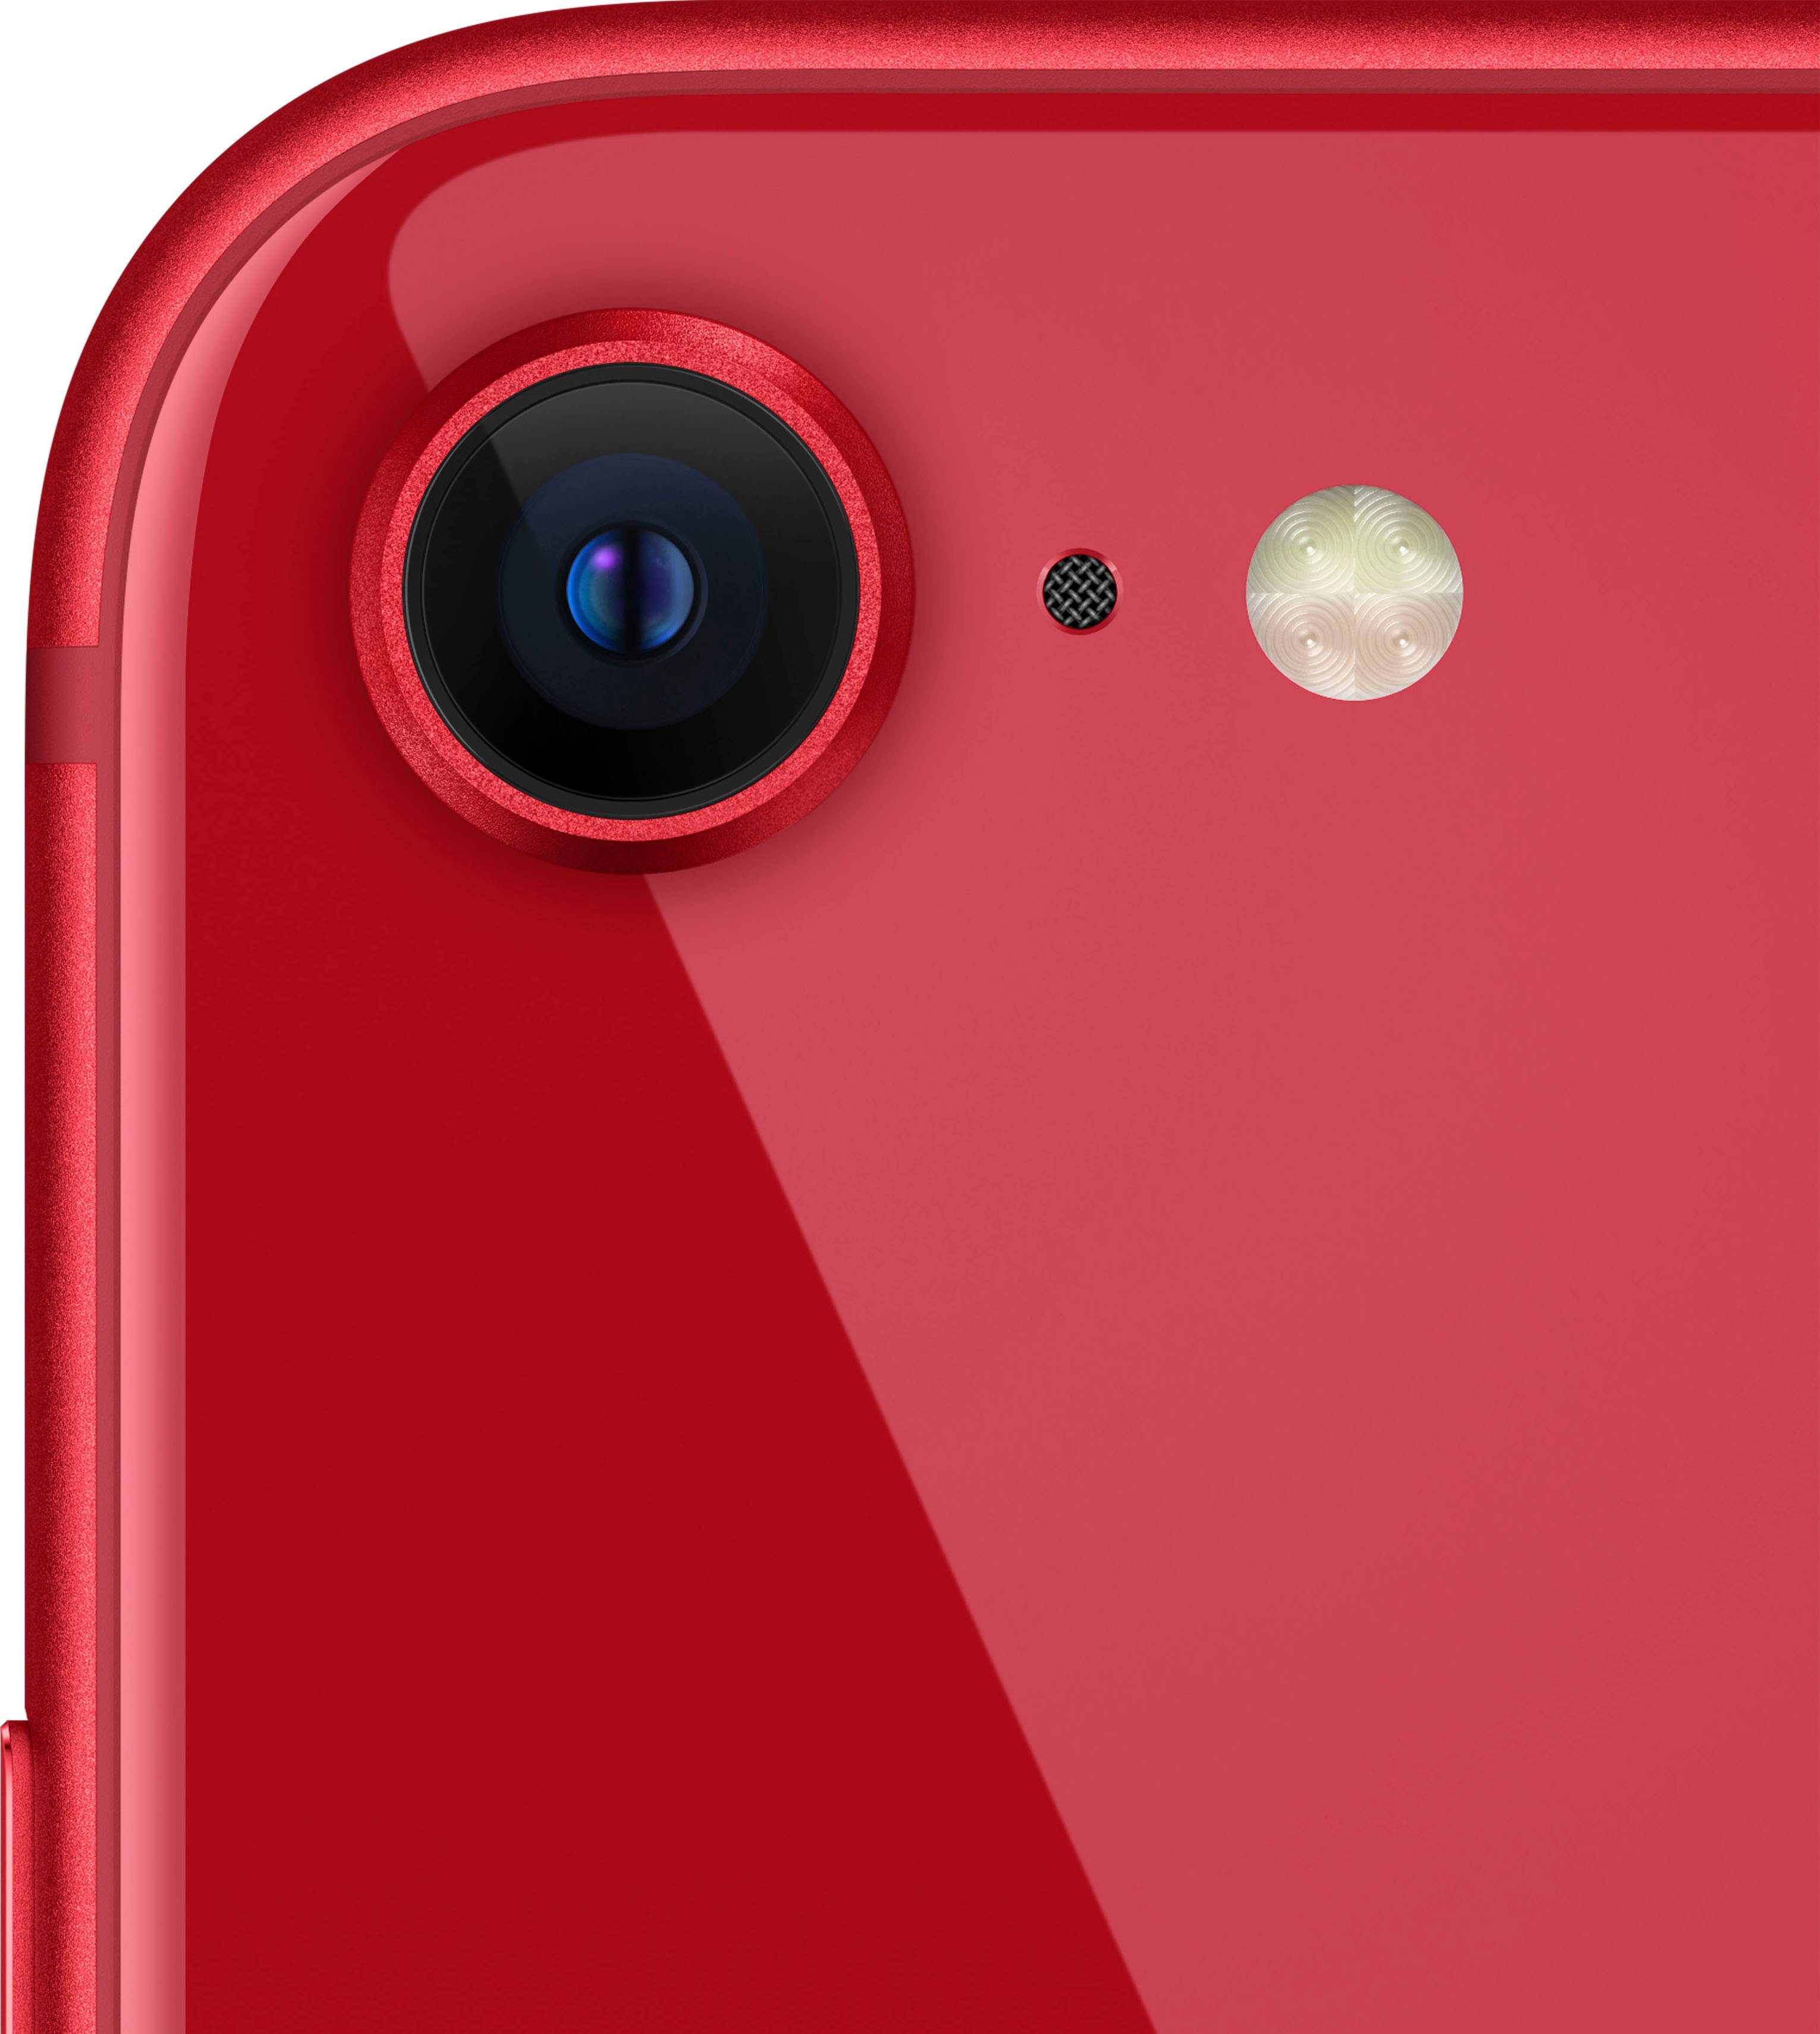 12 (PRODUCT)RED GB iPhone (2022) Zoll, SE MP Apple Smartphone cm/4,7 Speicherplatz, Kamera) 256 (11,94